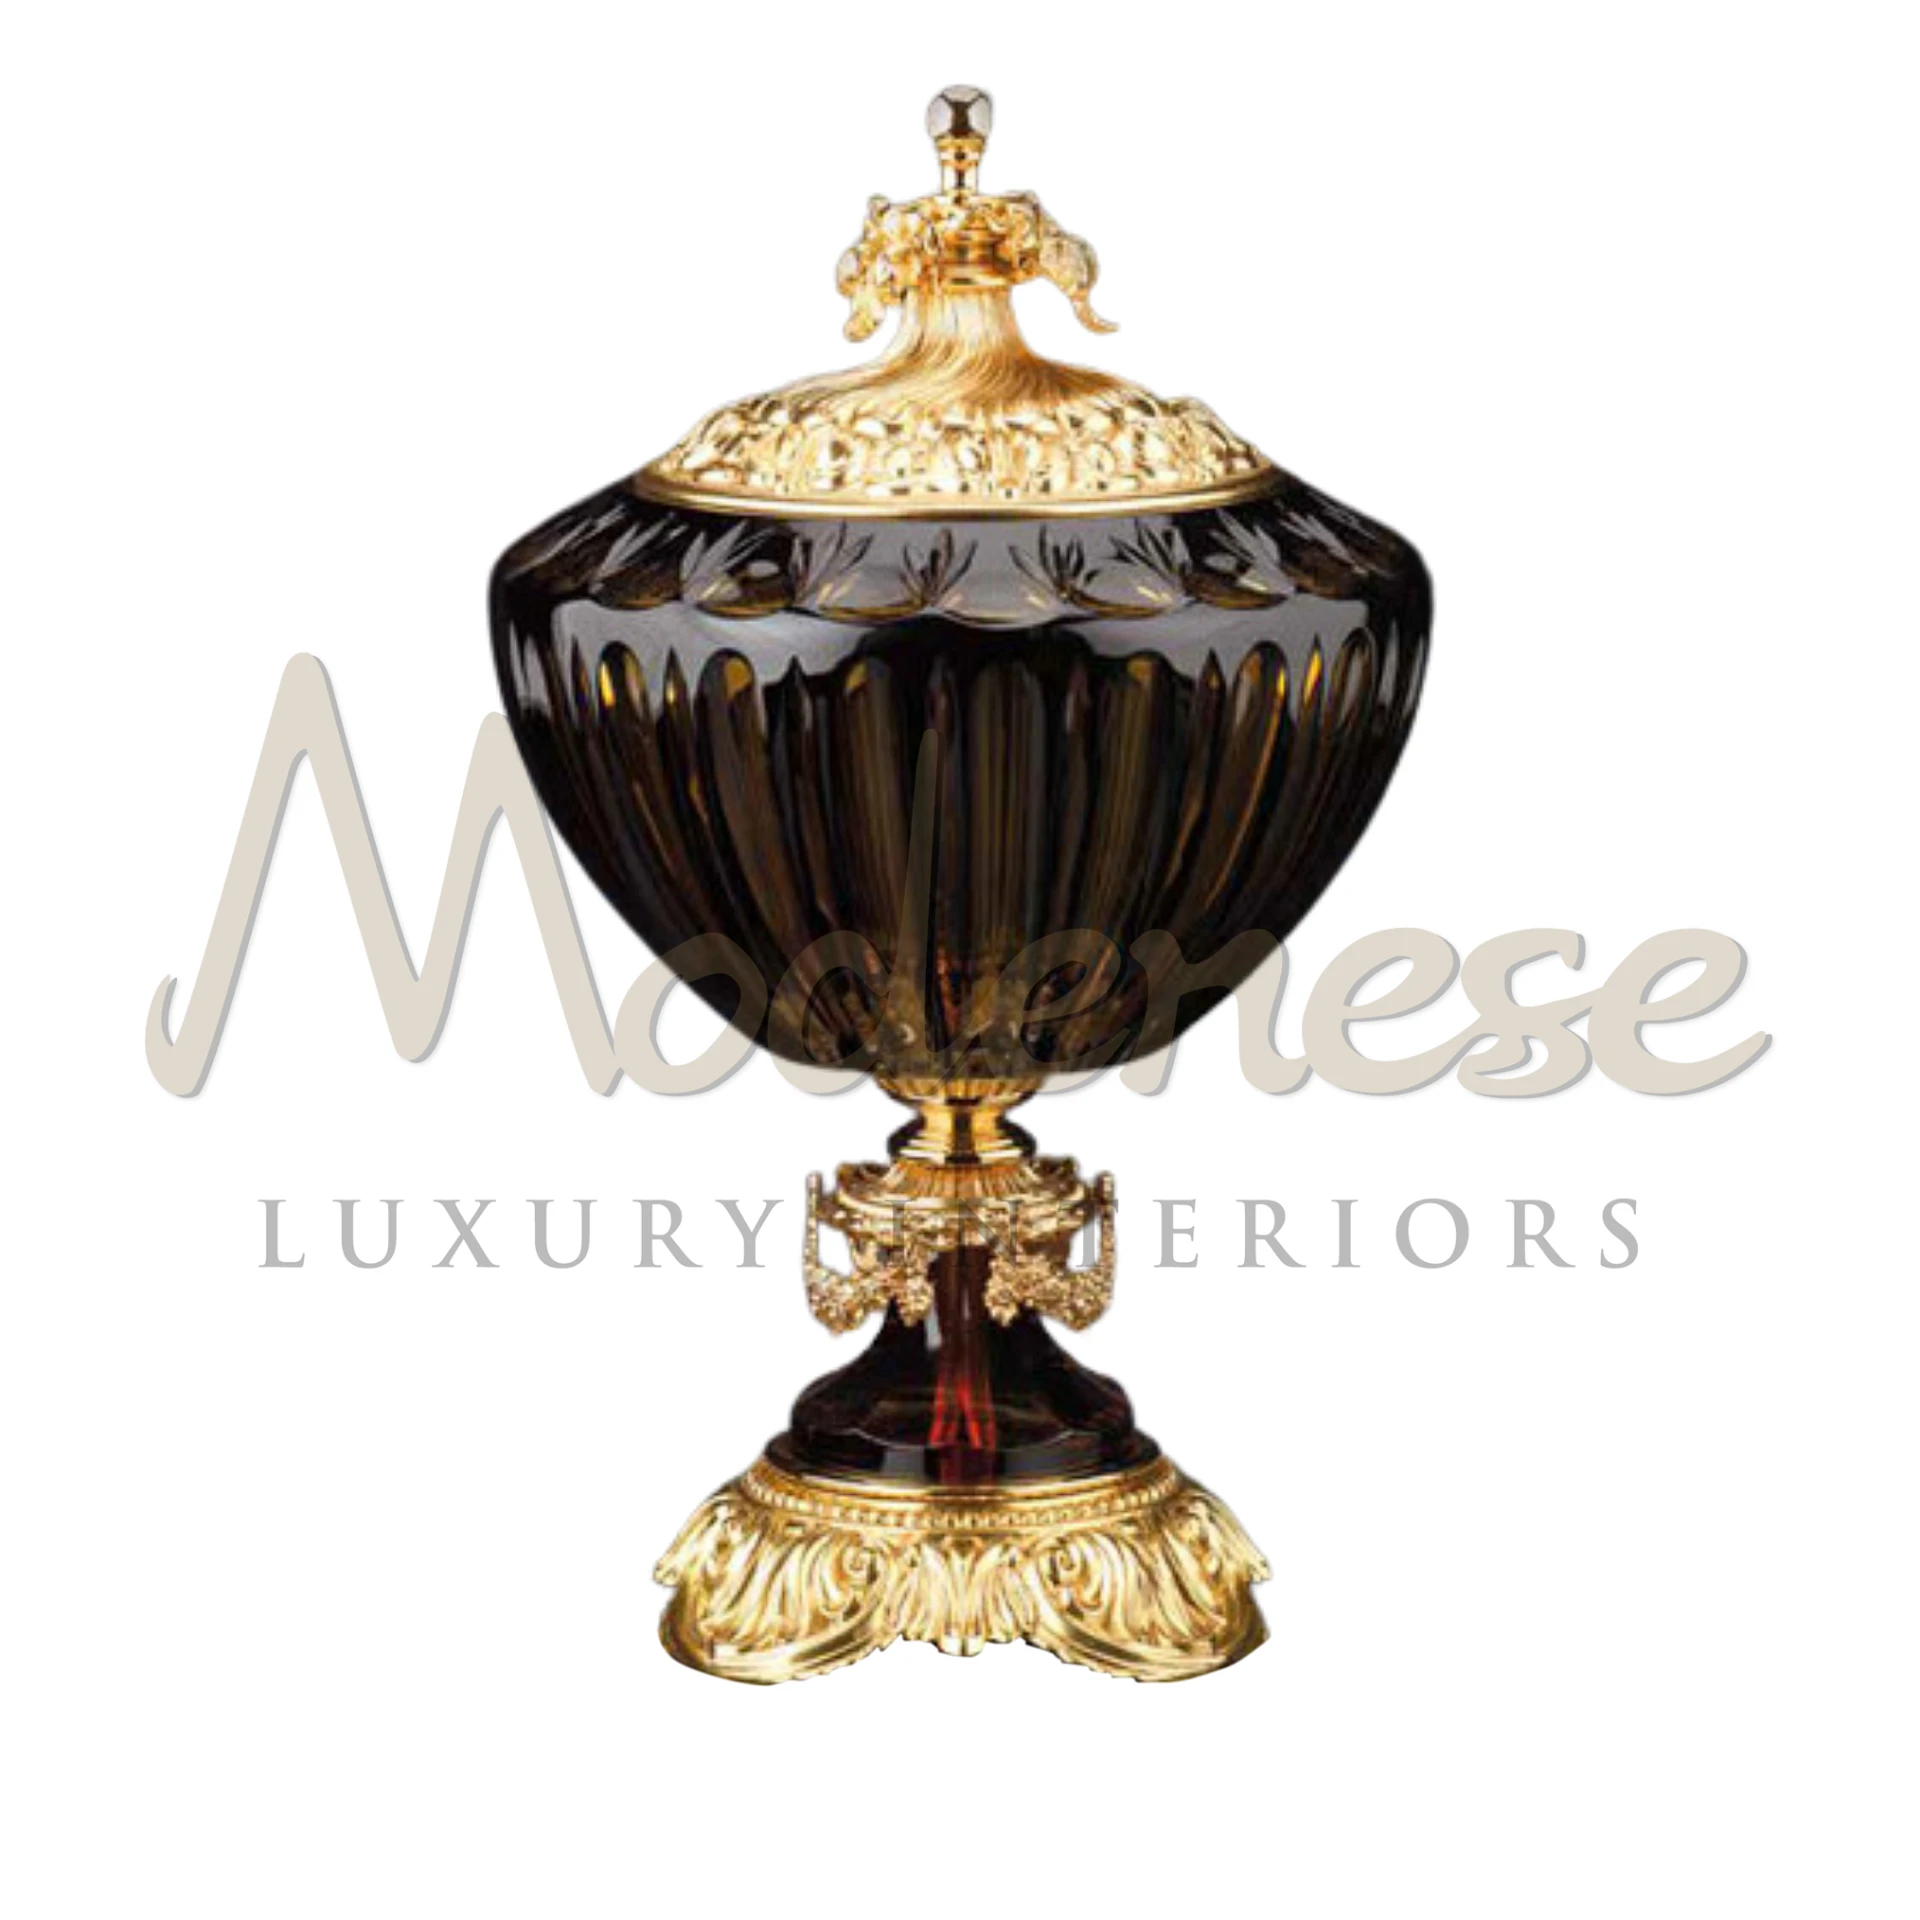 Opulent Victorian Dark Glass Vase by Modenese, showcasing elaborate Victorian design in sophisticated dark glass for luxury decor.